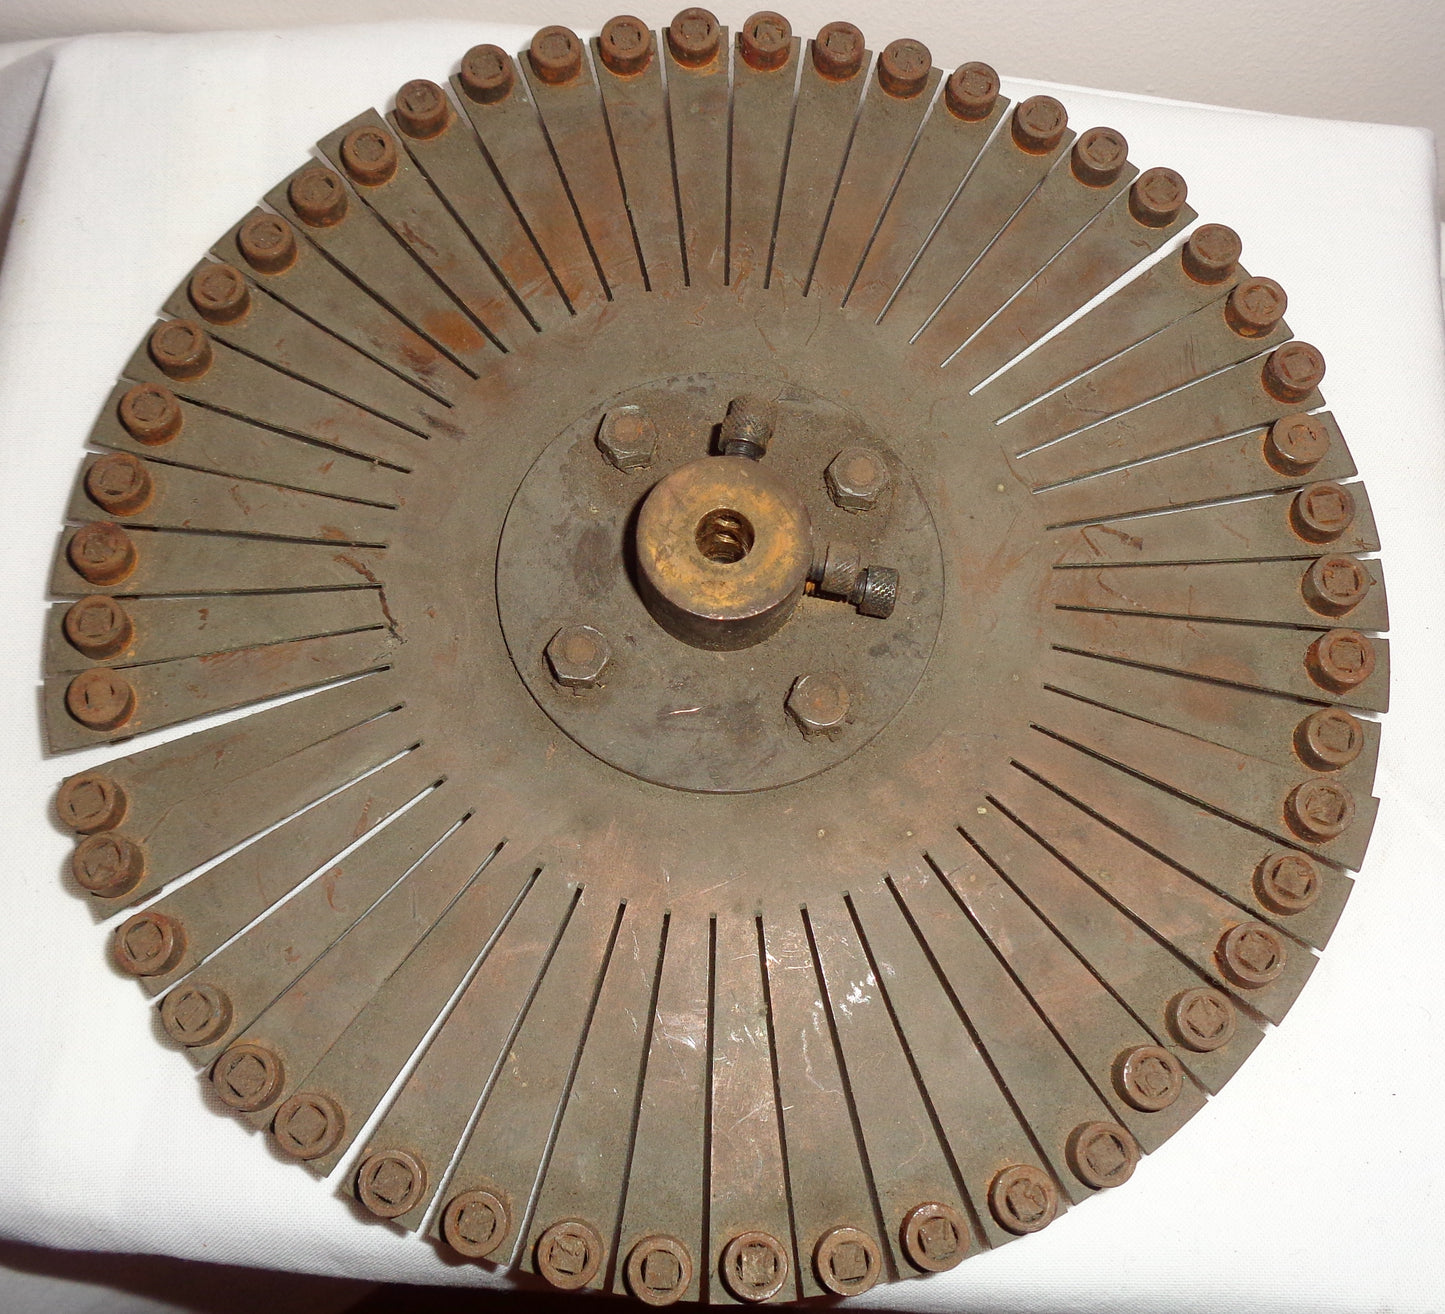 Vintage Telegraphy Uniselector Wheel